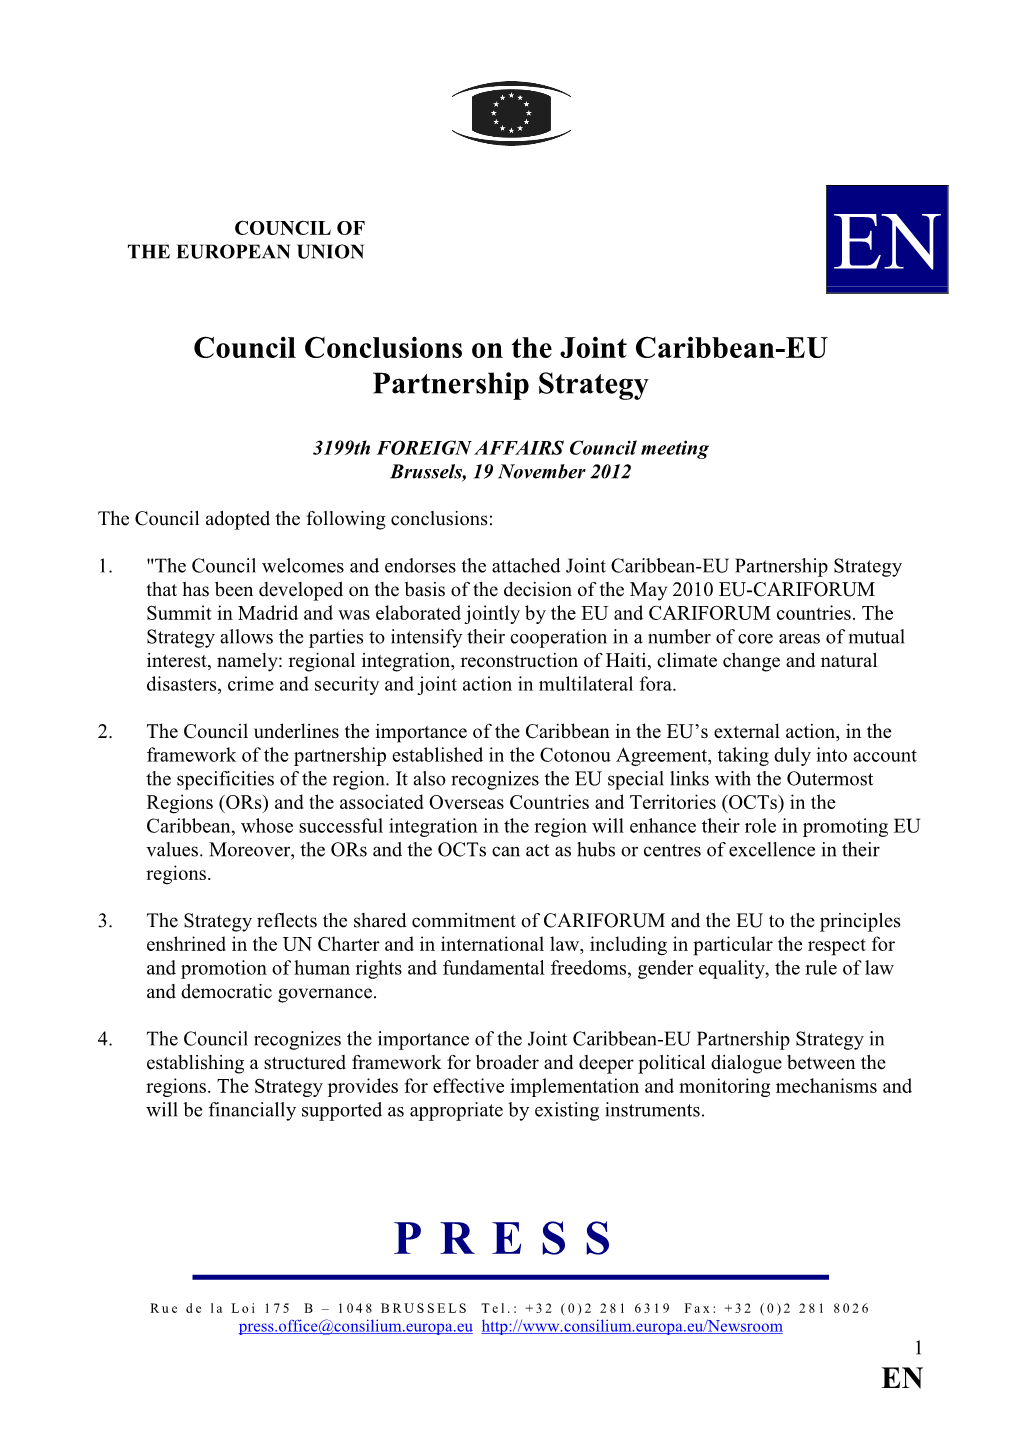 Joint Caribbean-EU Partnership Strategy